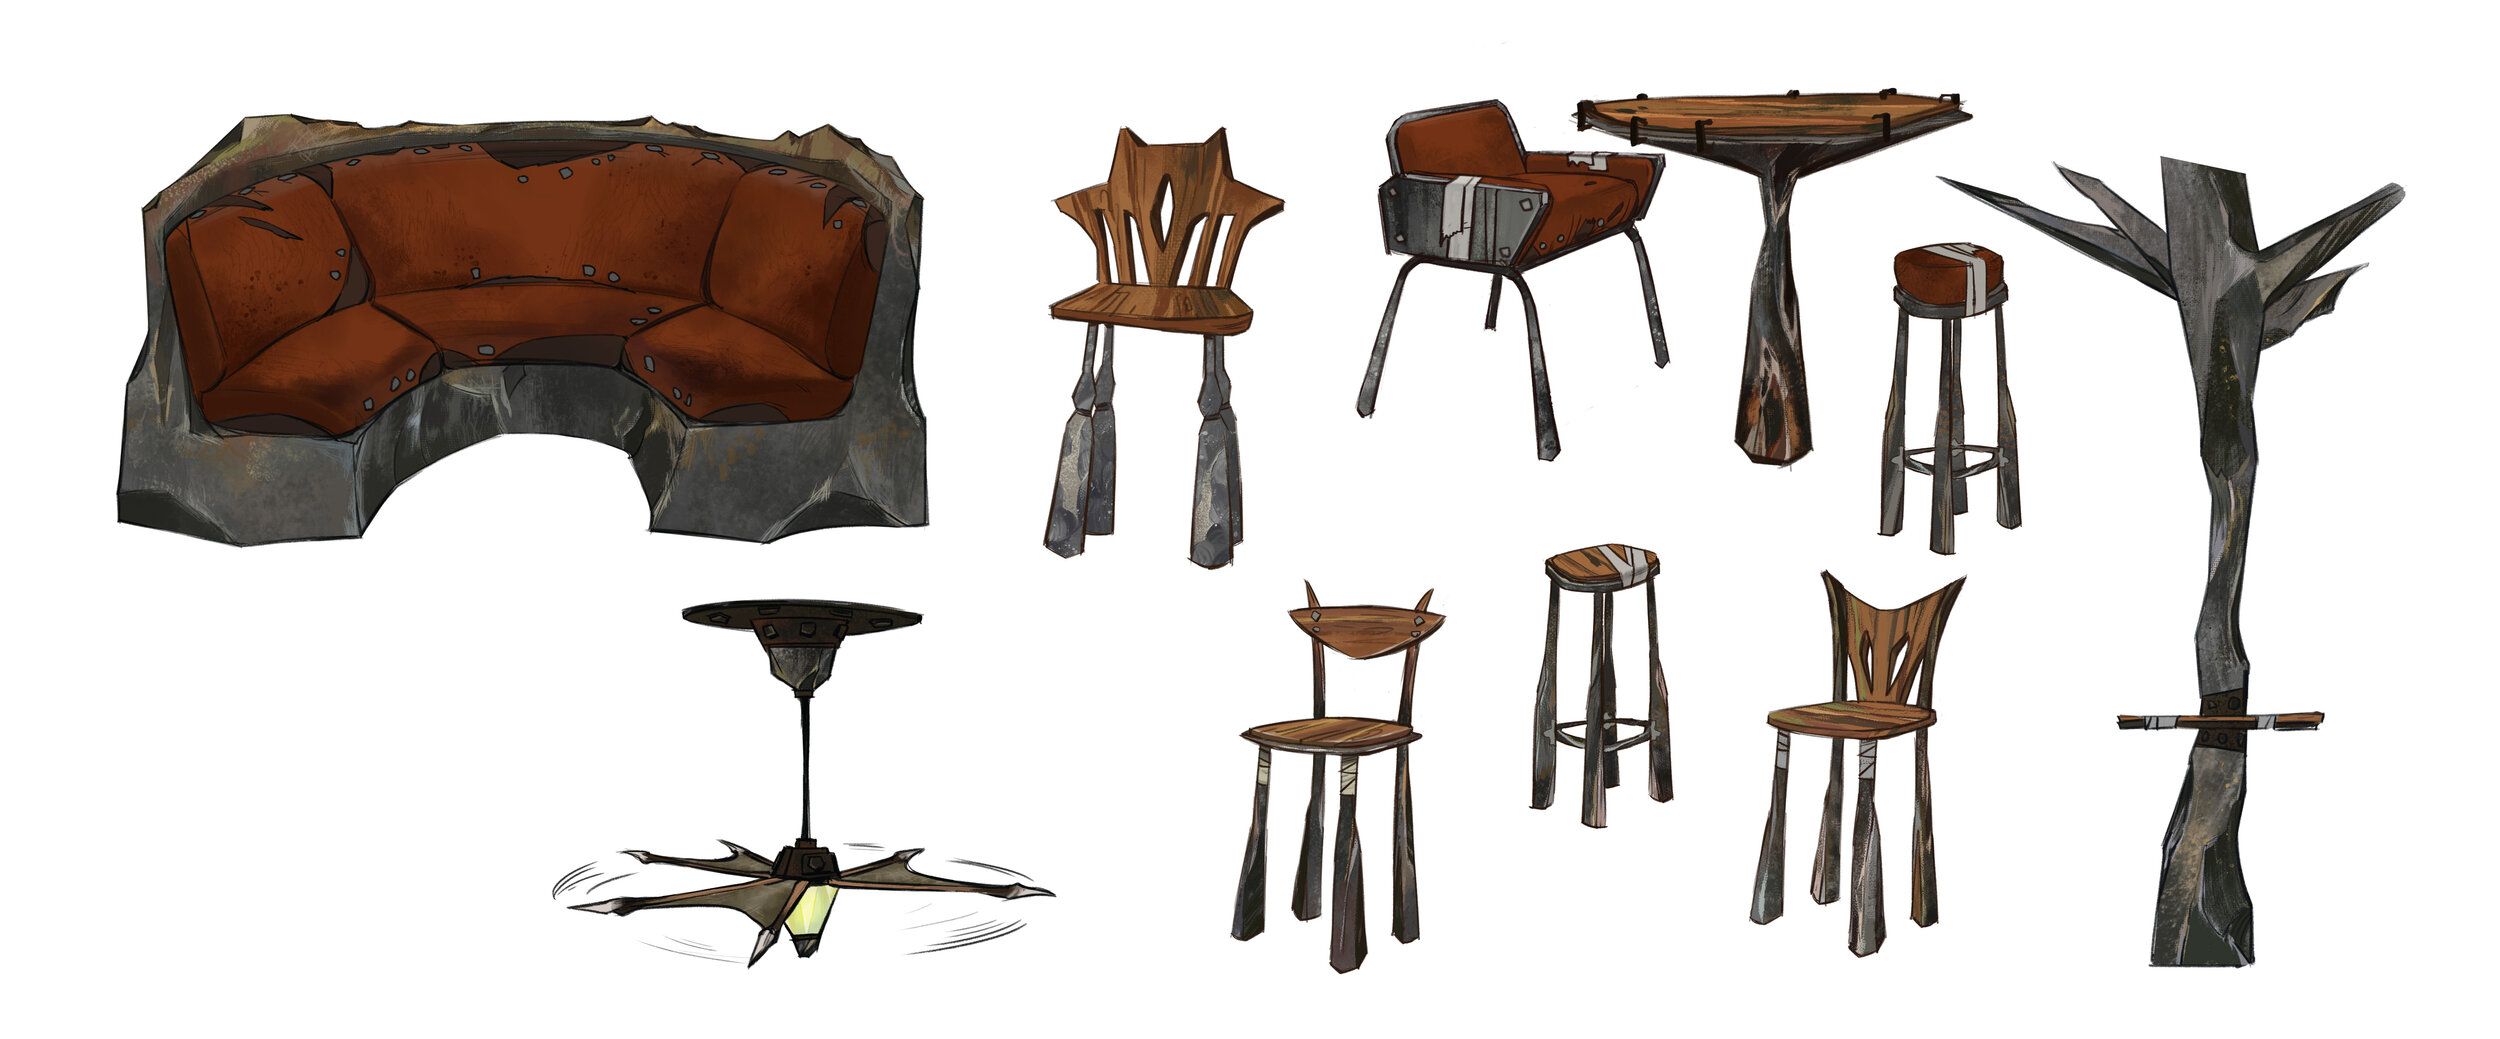 04 genericbar furniture - textures.jpg